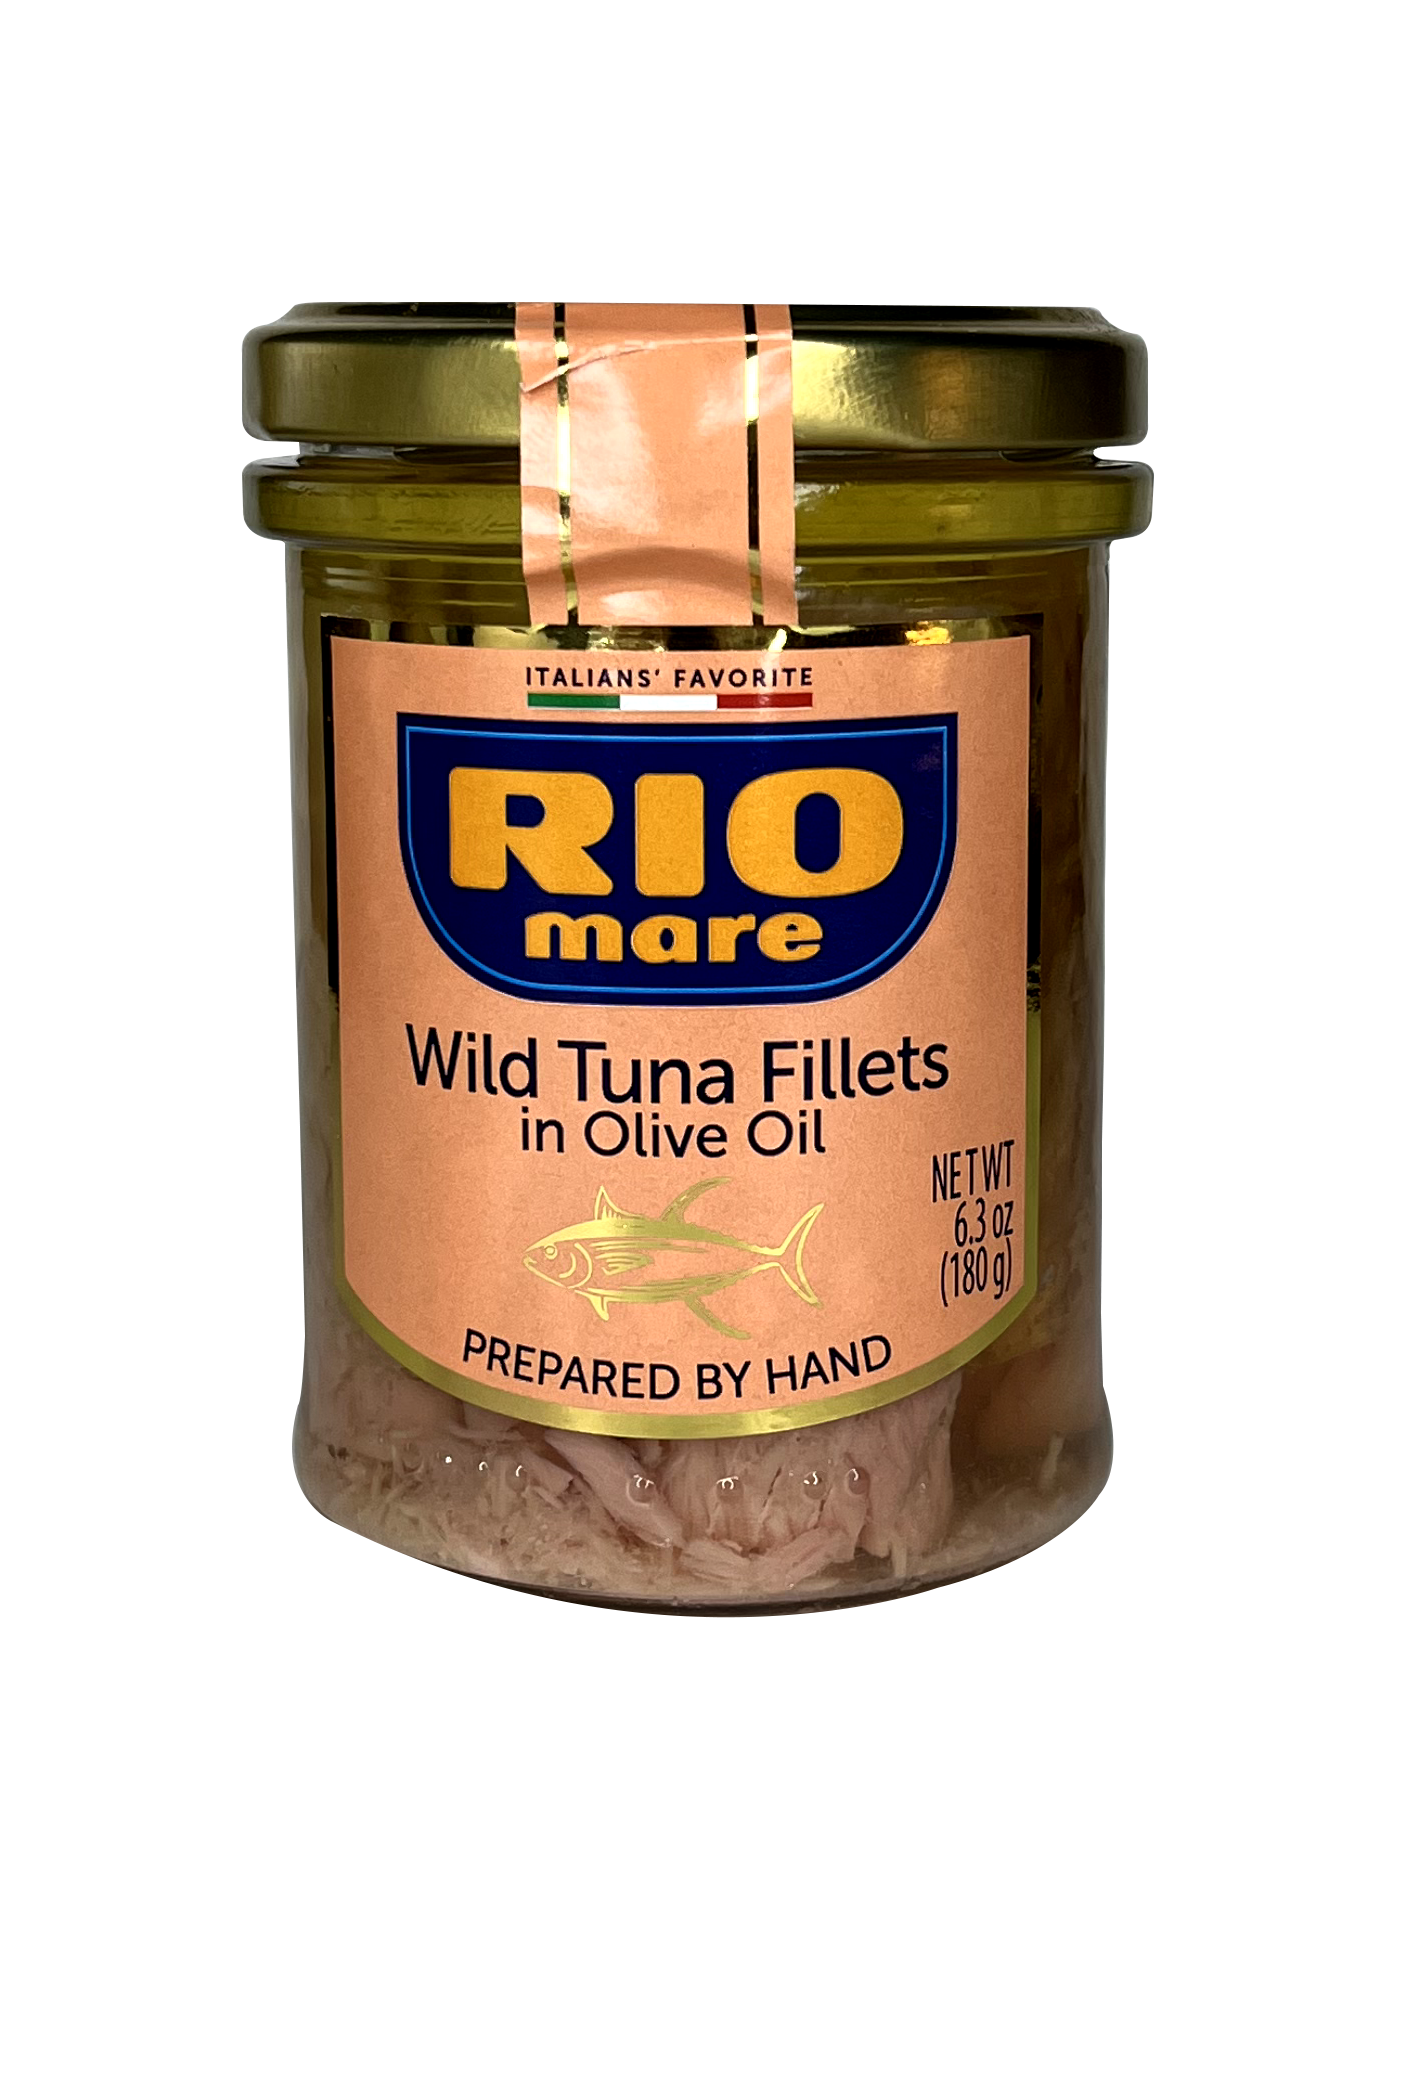 Wild Tuna fillets in olive oil